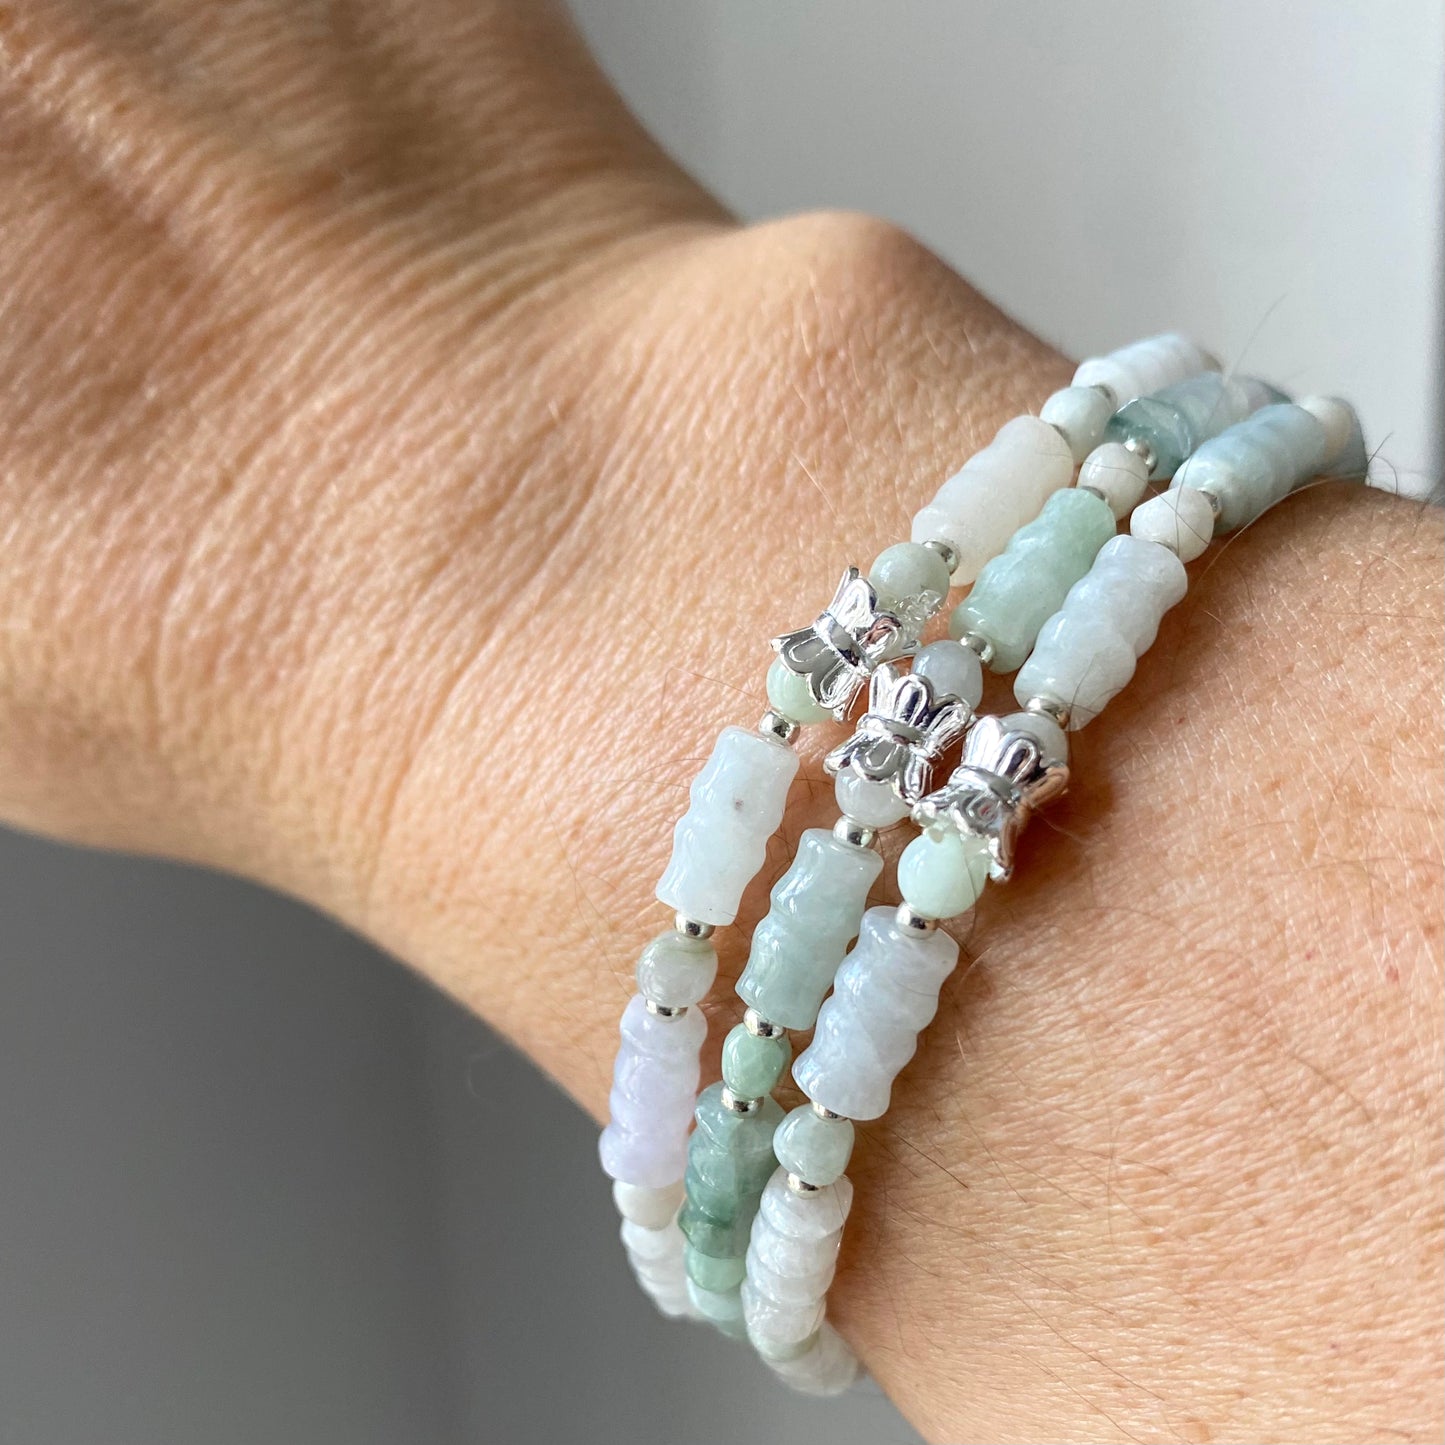 Stackable Jadeite stretch bracelets